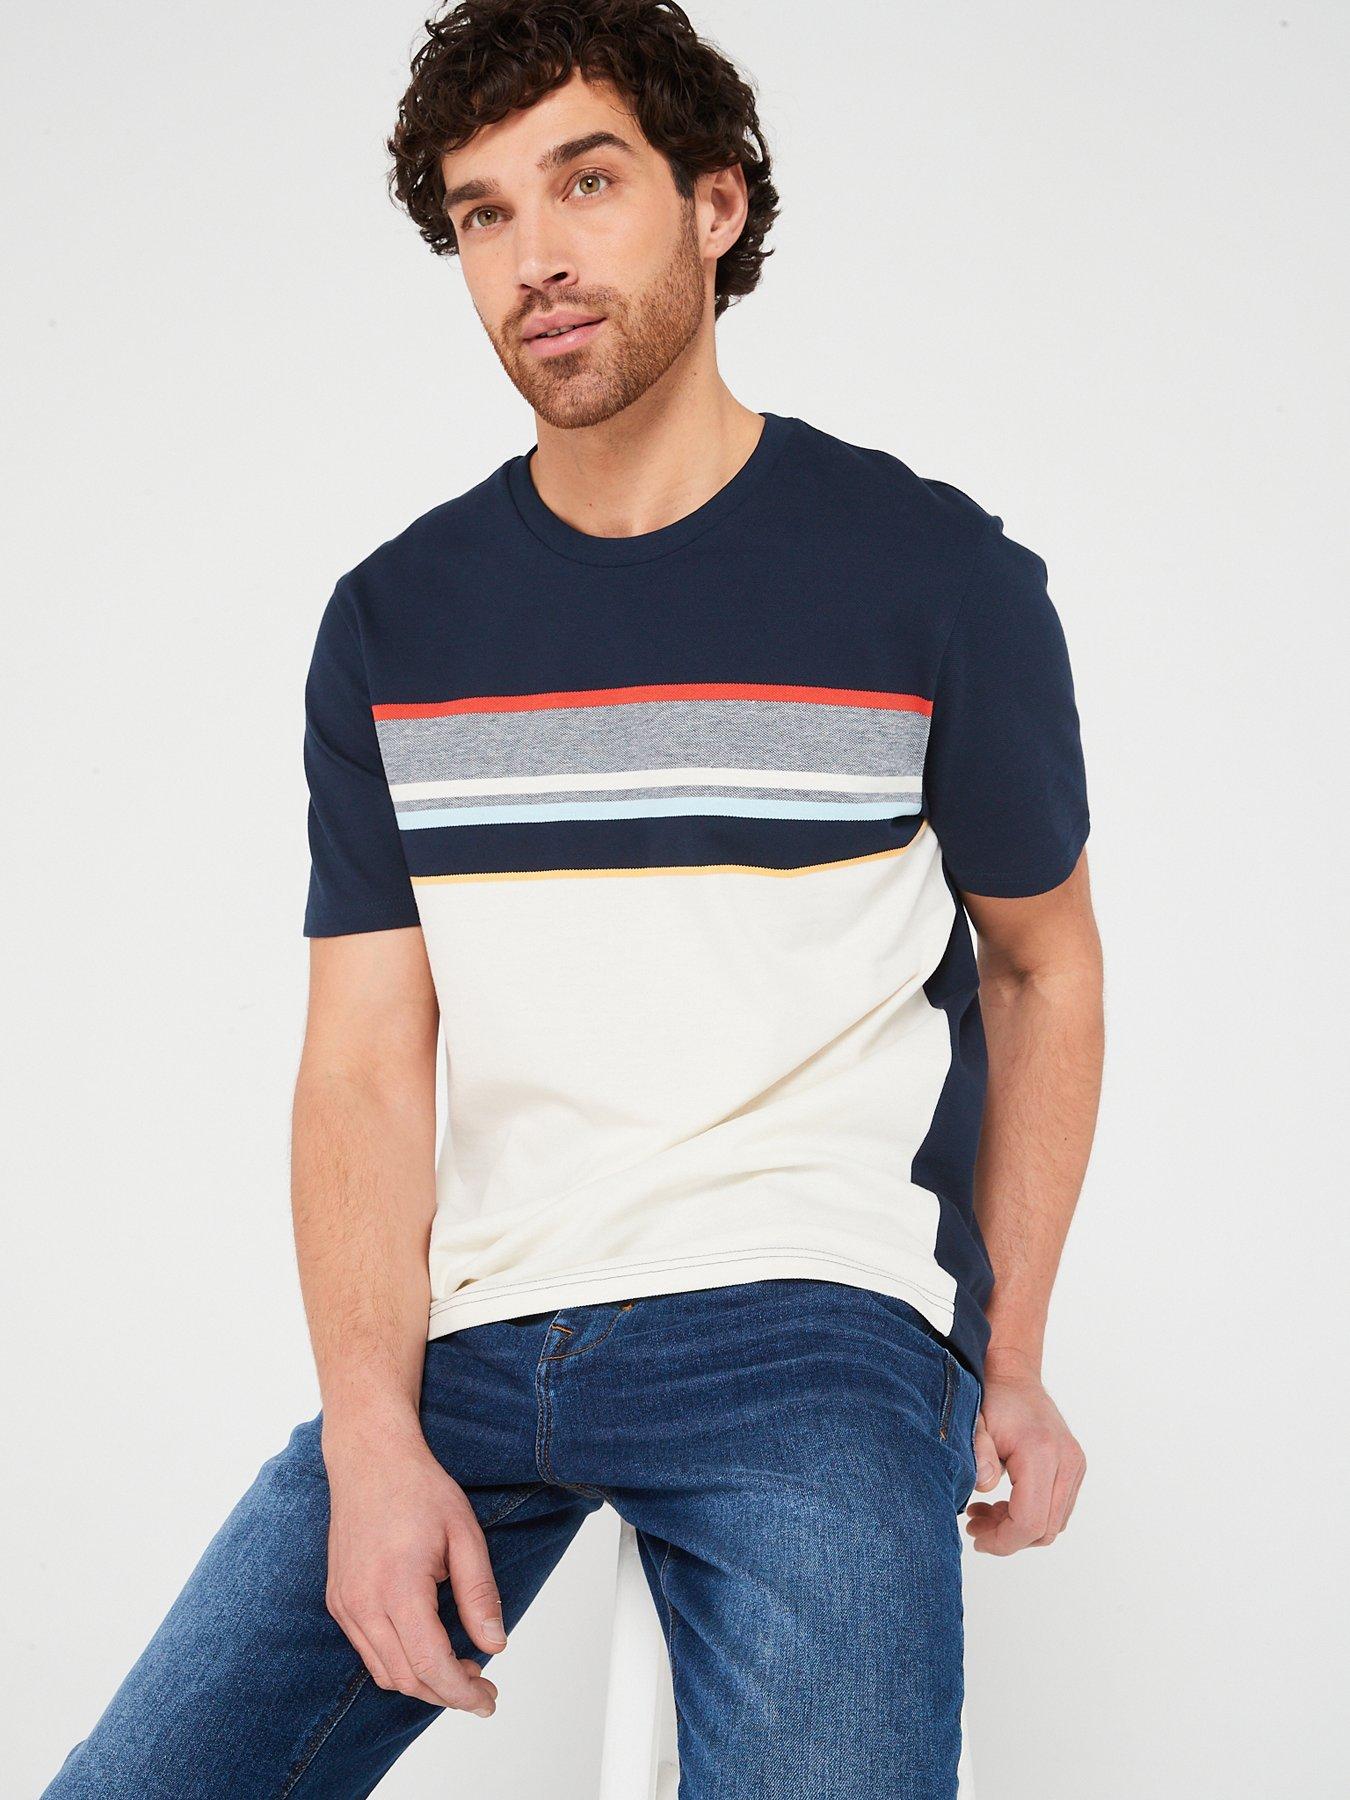 Very Man Yarn Dyed Pique T-shirt - Navy | Very.co.uk